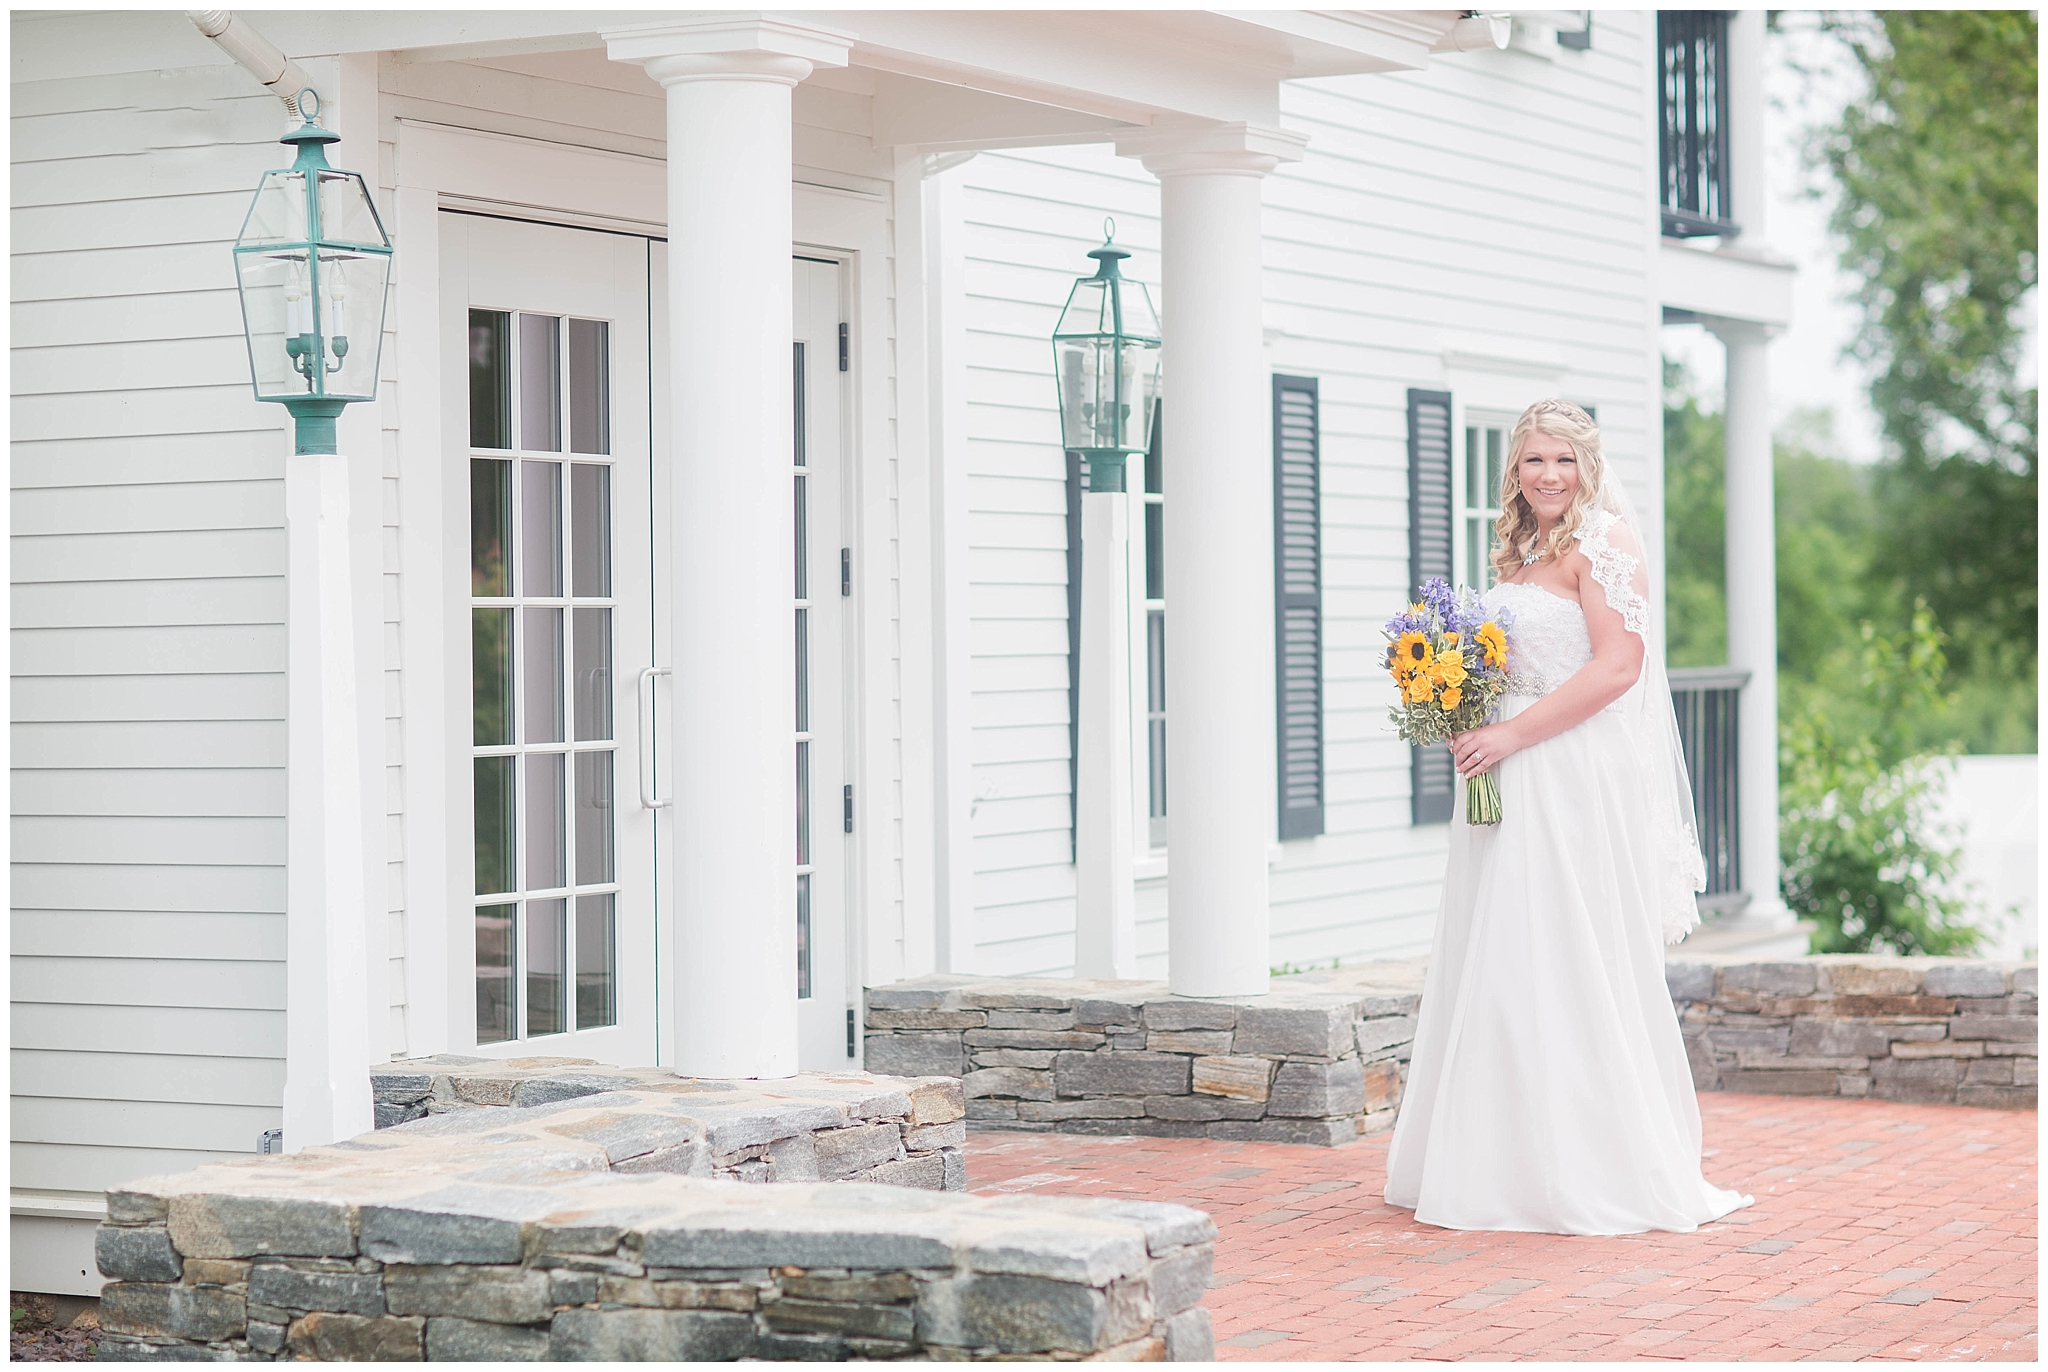 Publick House Wedding in Sturbridge Massachusetts 